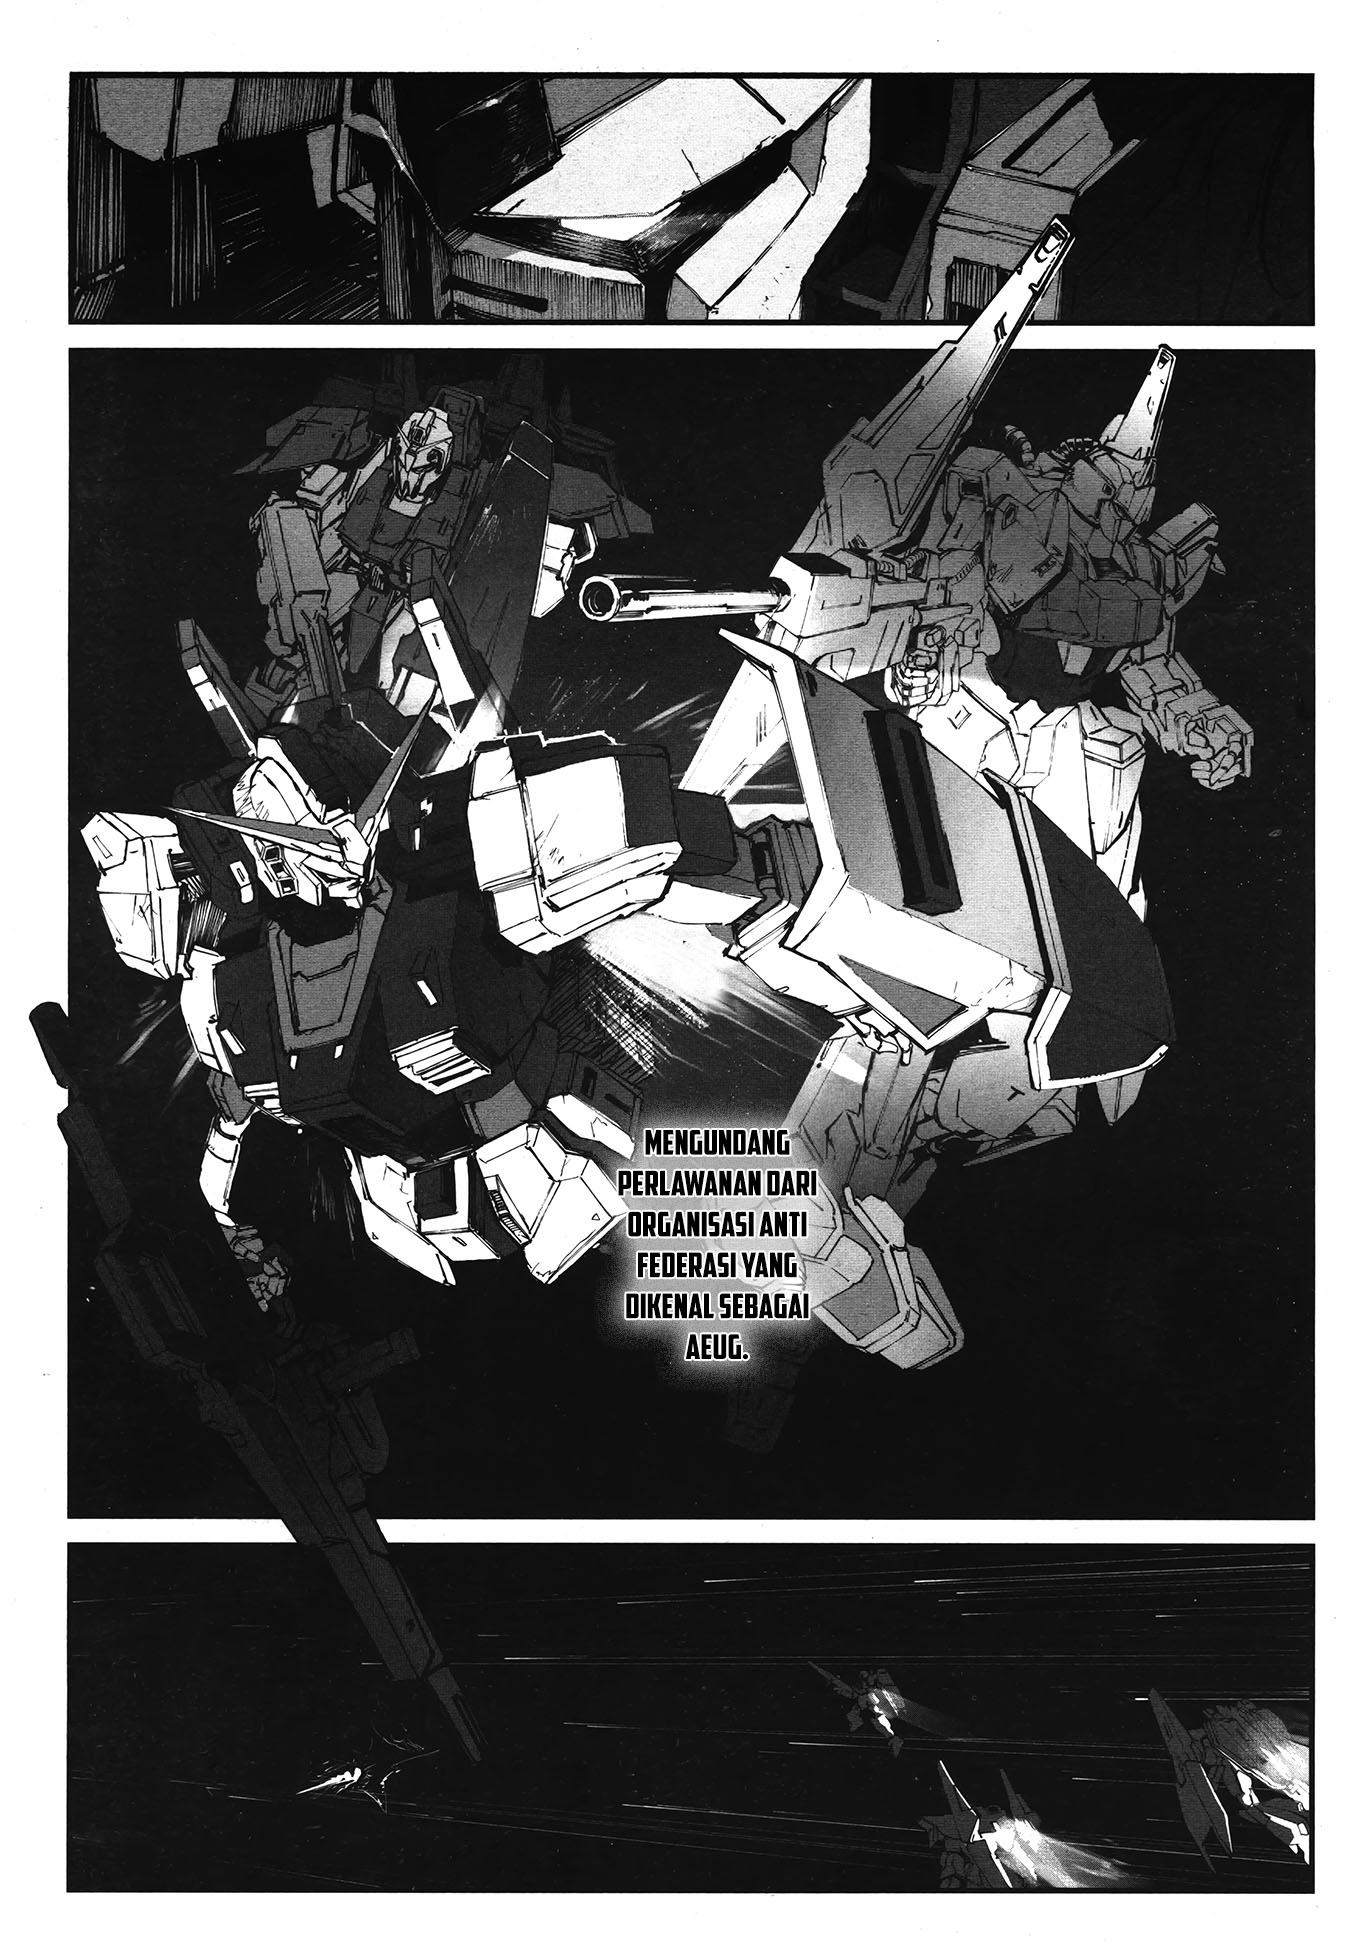 Mobile Suit Gundam Wearwolf Chapter 1